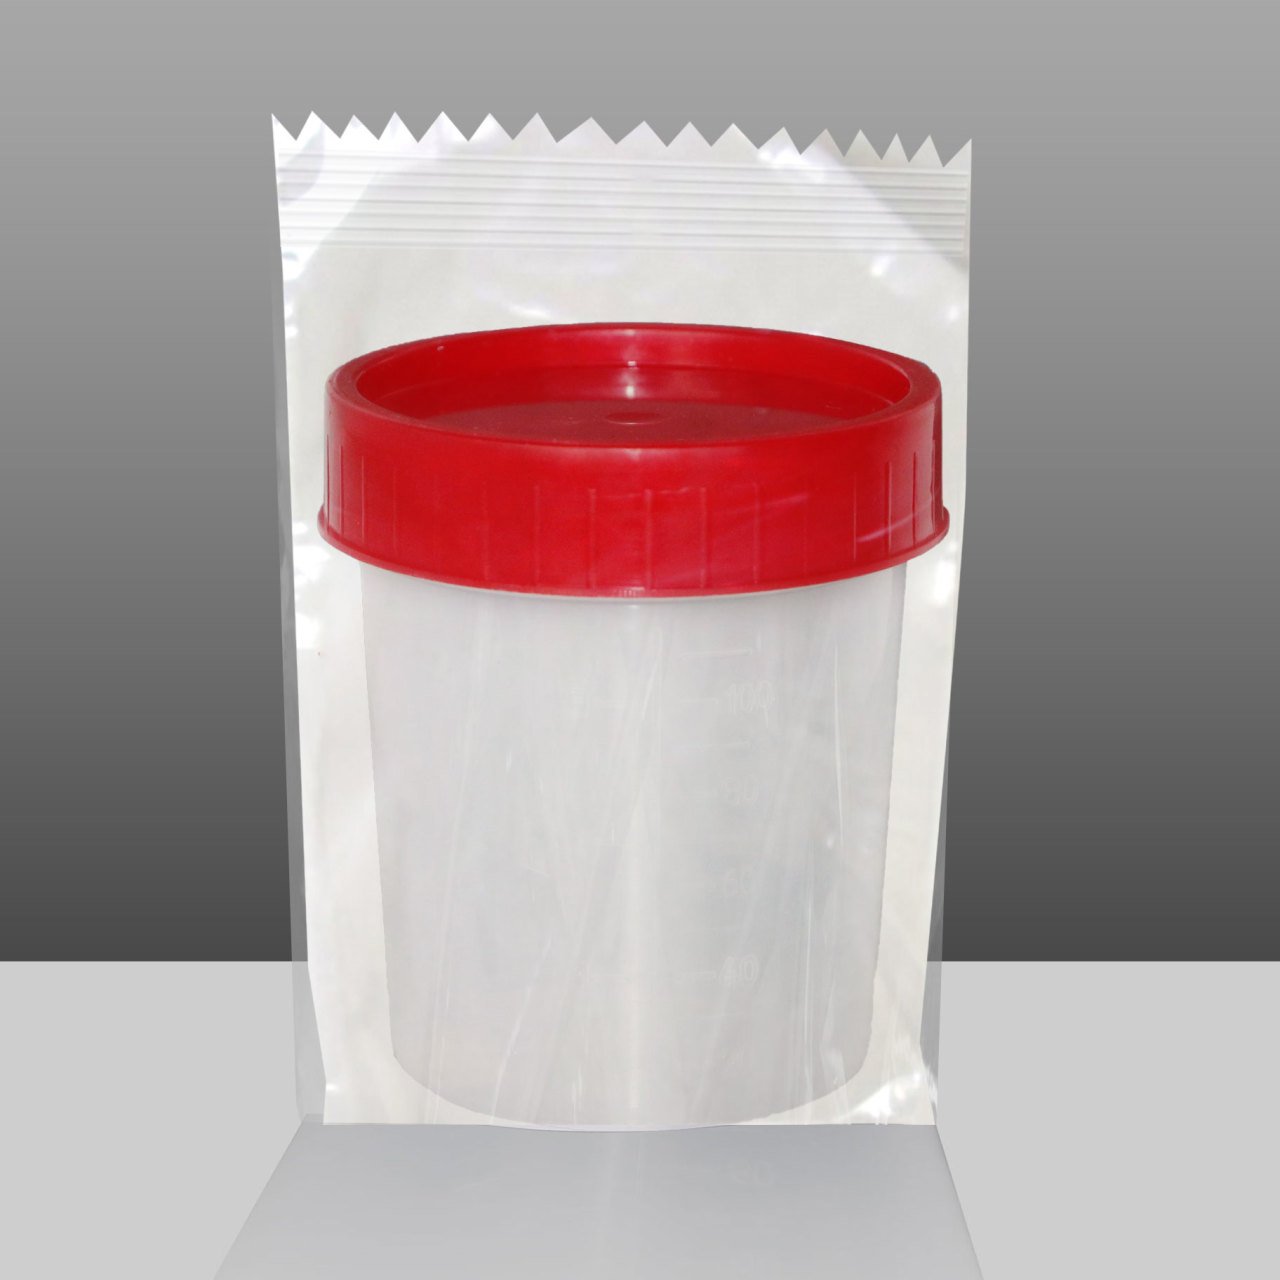 İdrar Toplama Bardağı 100 ml x 400 Adet (Steril / Tekli Poşetli) / Urine Collection Container (Sterile / Packed)